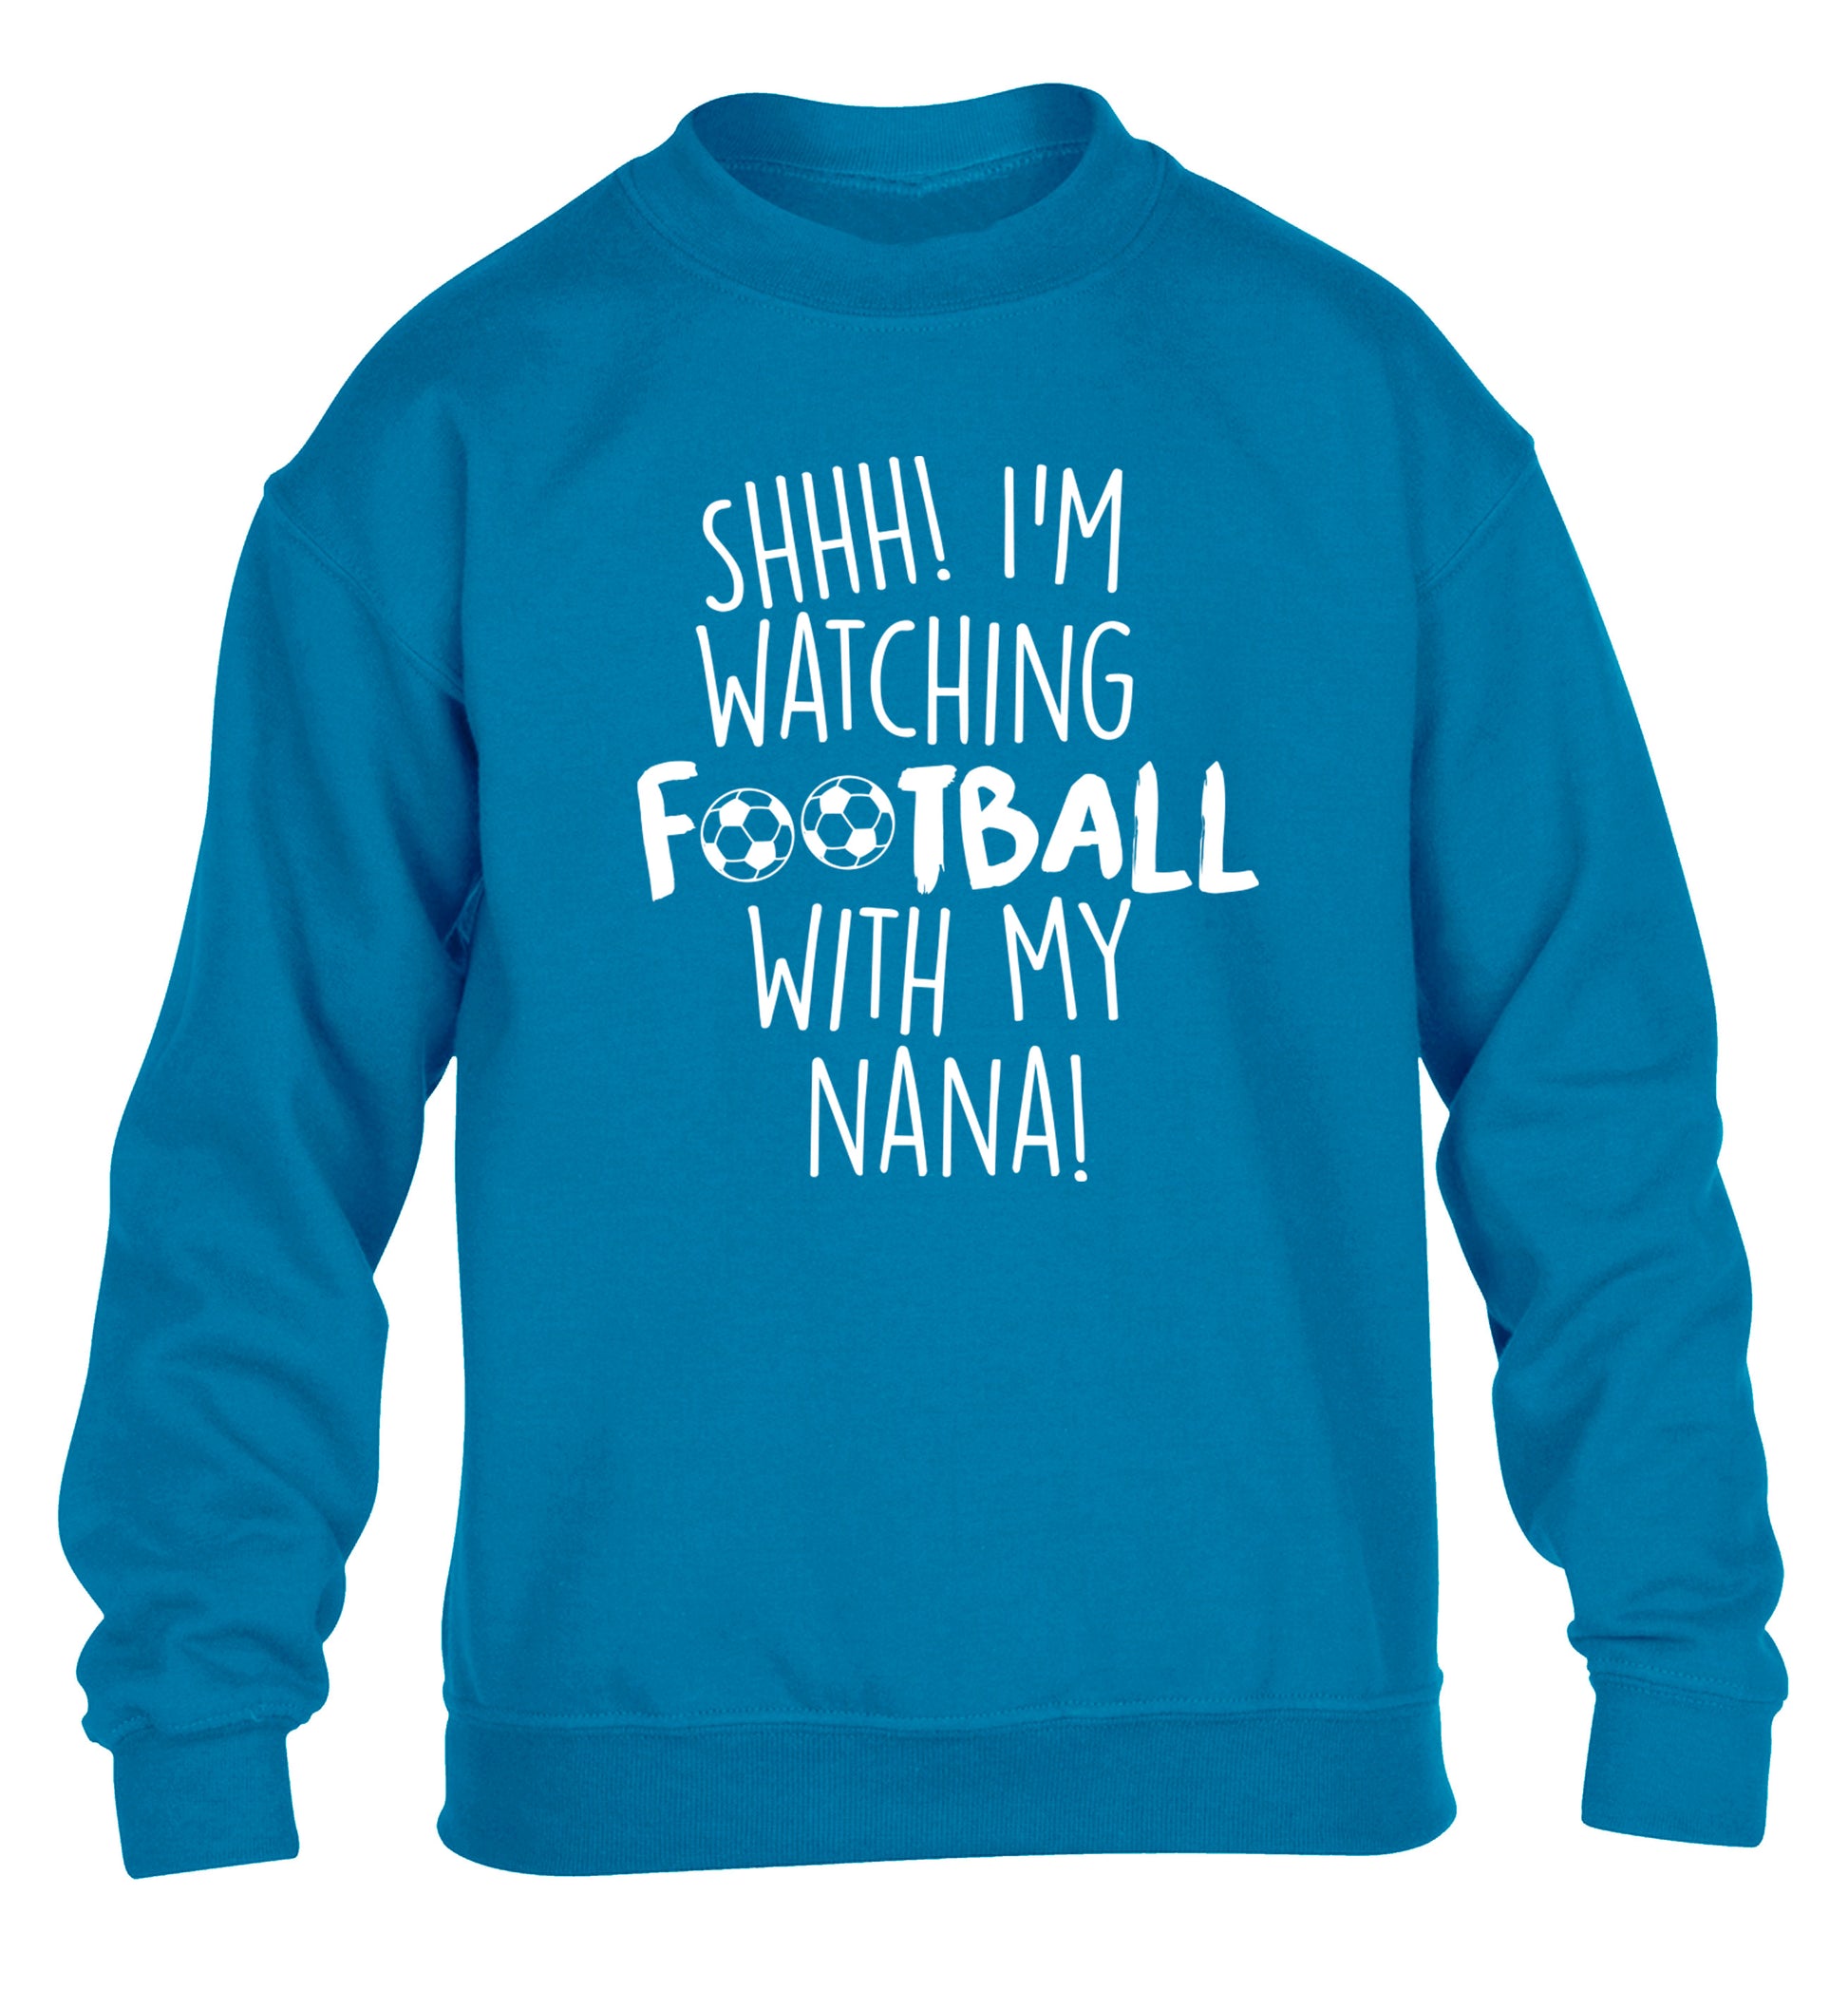 Shhh I'm watching football with my nana children's blue sweater 12-14 Years